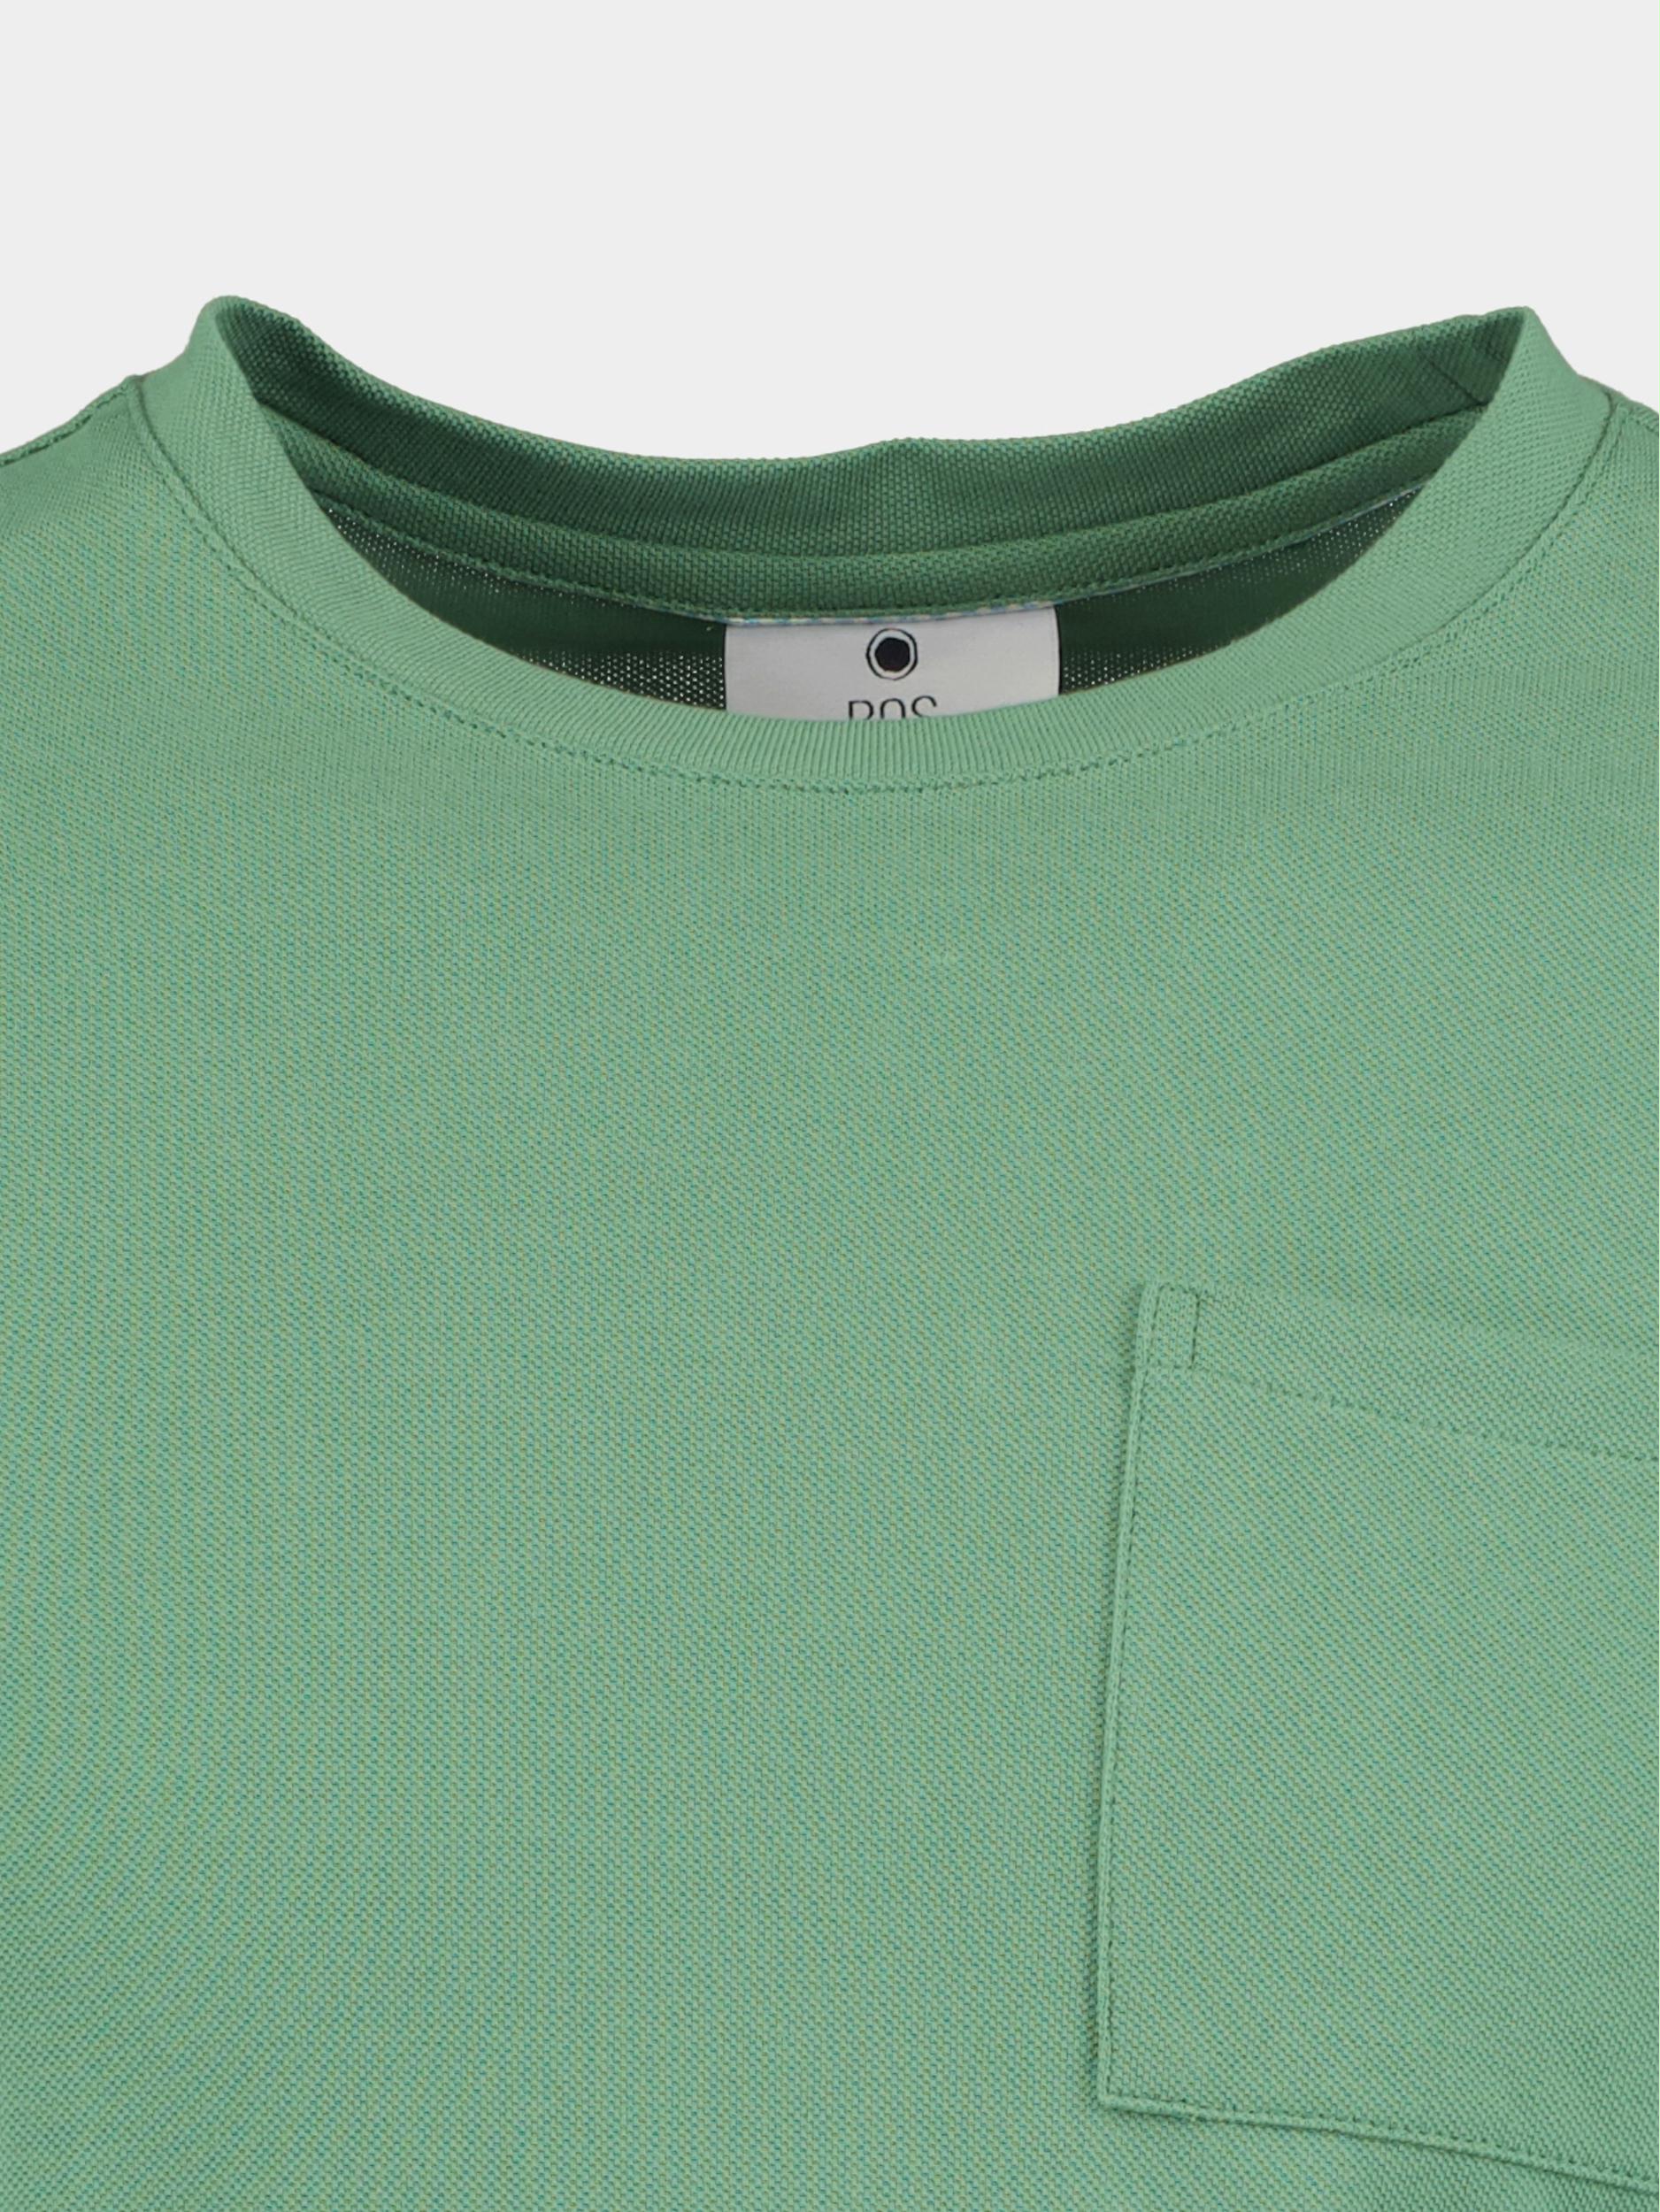 Bos Bright Blue T-shirt korte mouw Groen Cooper T-shirt Pique 23108CO54BO/903 modern green